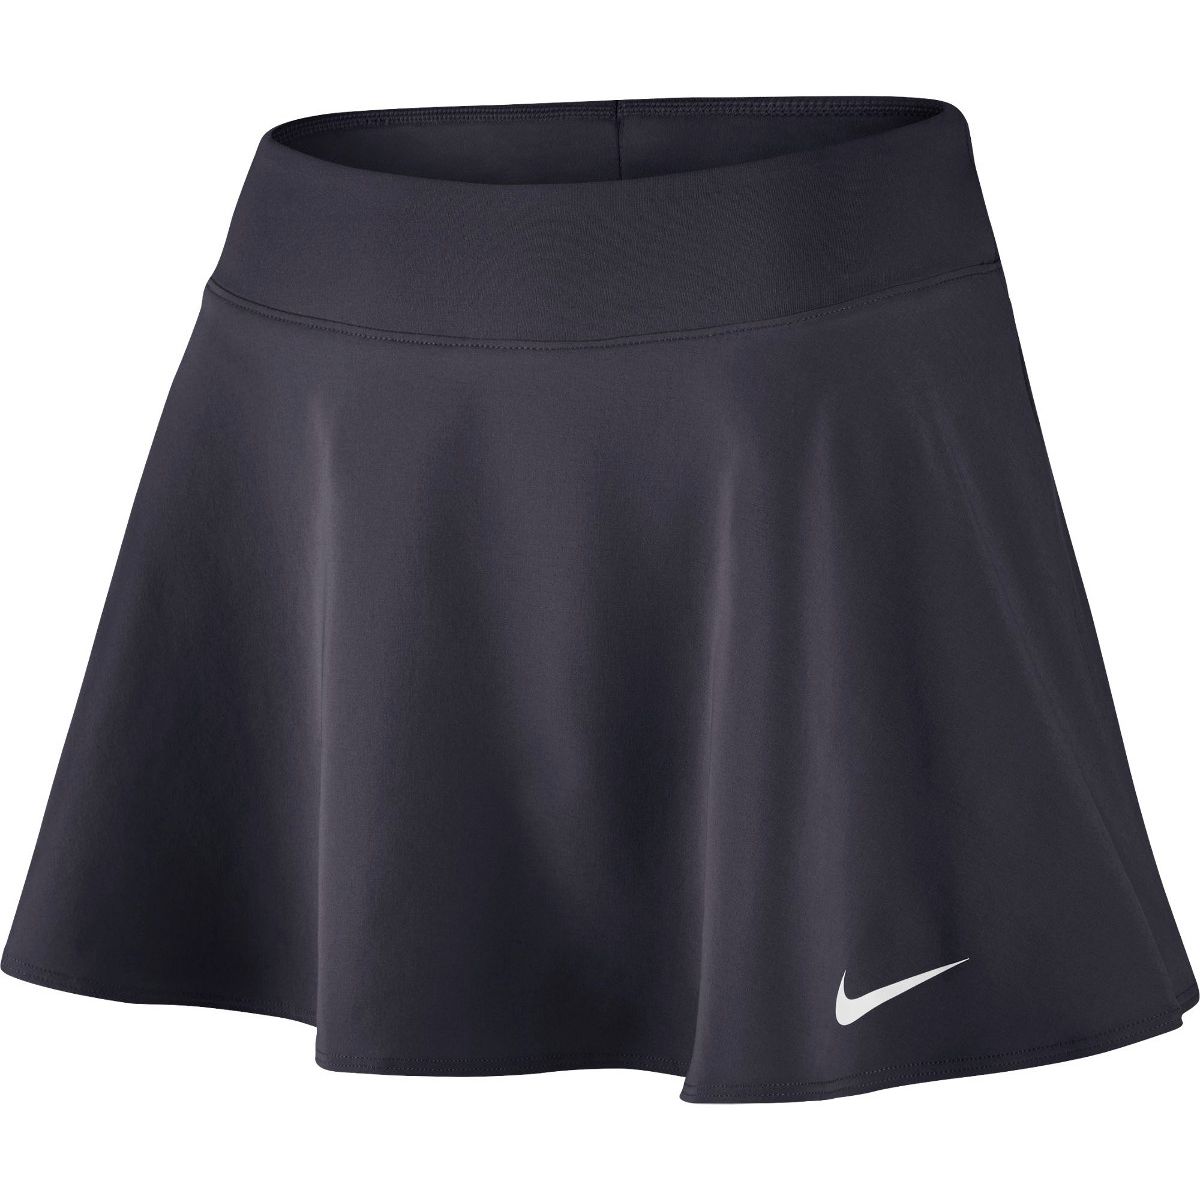 NikeCourt Pure Women's Tennis Skirt 830616-009